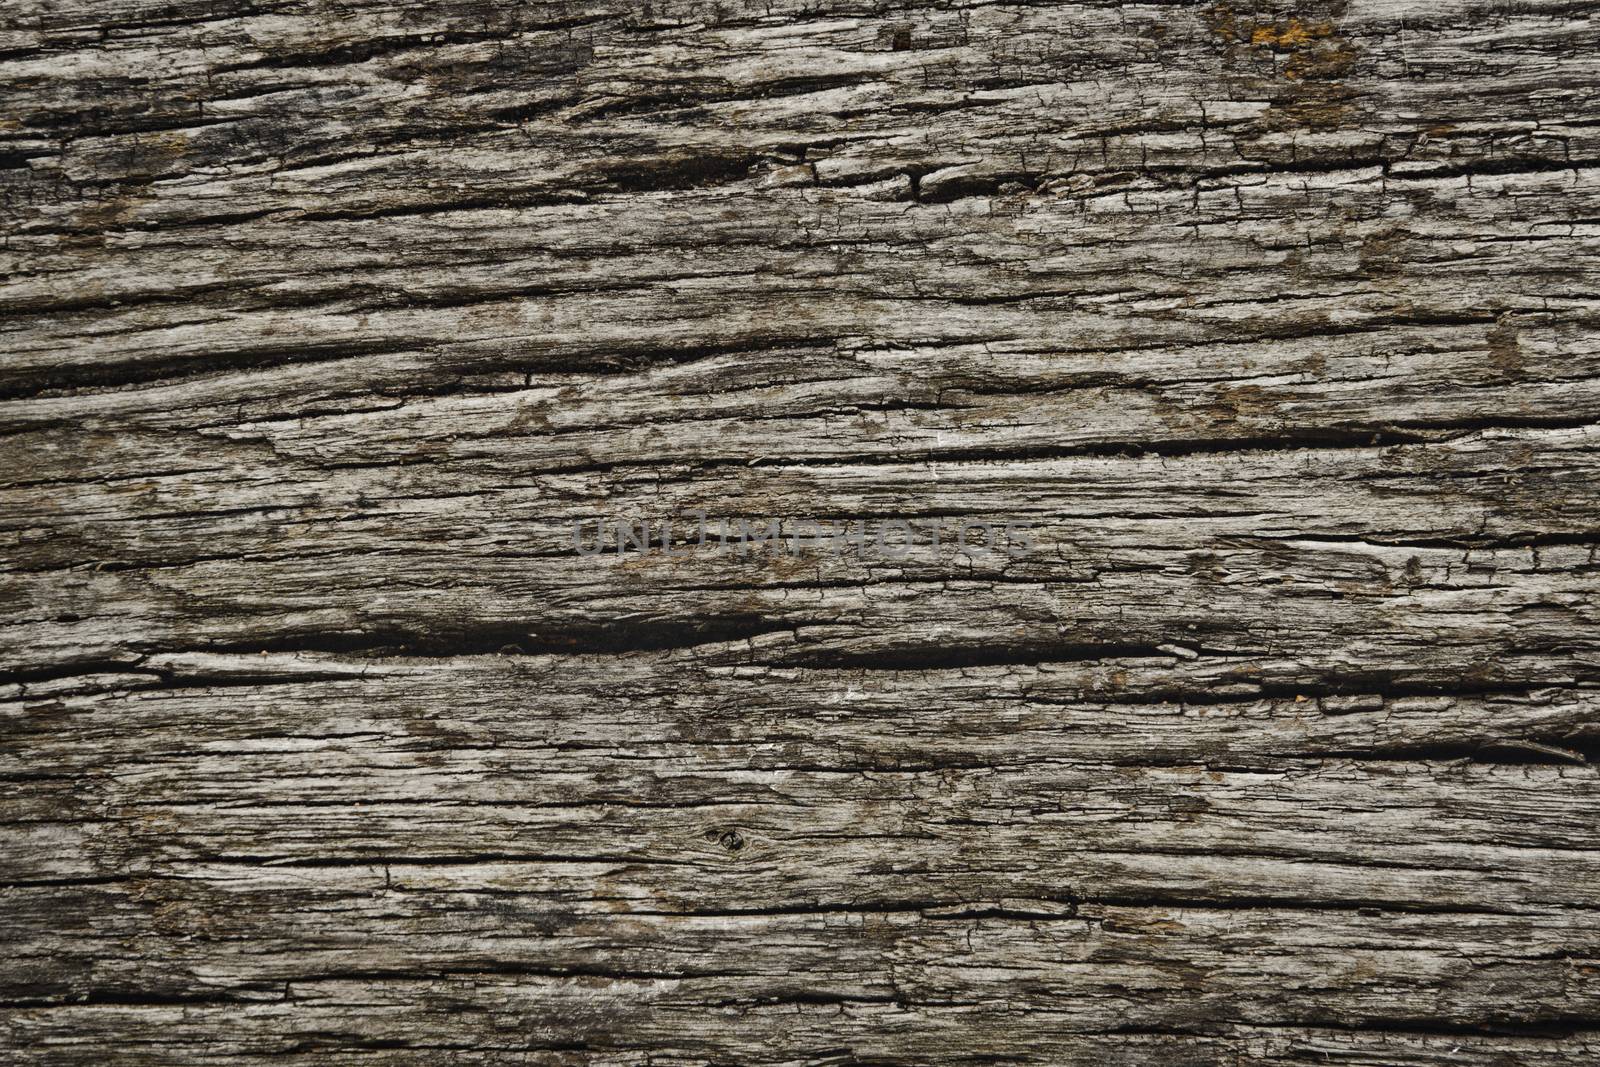 Rough Dark Wood Texture by mrdoomits